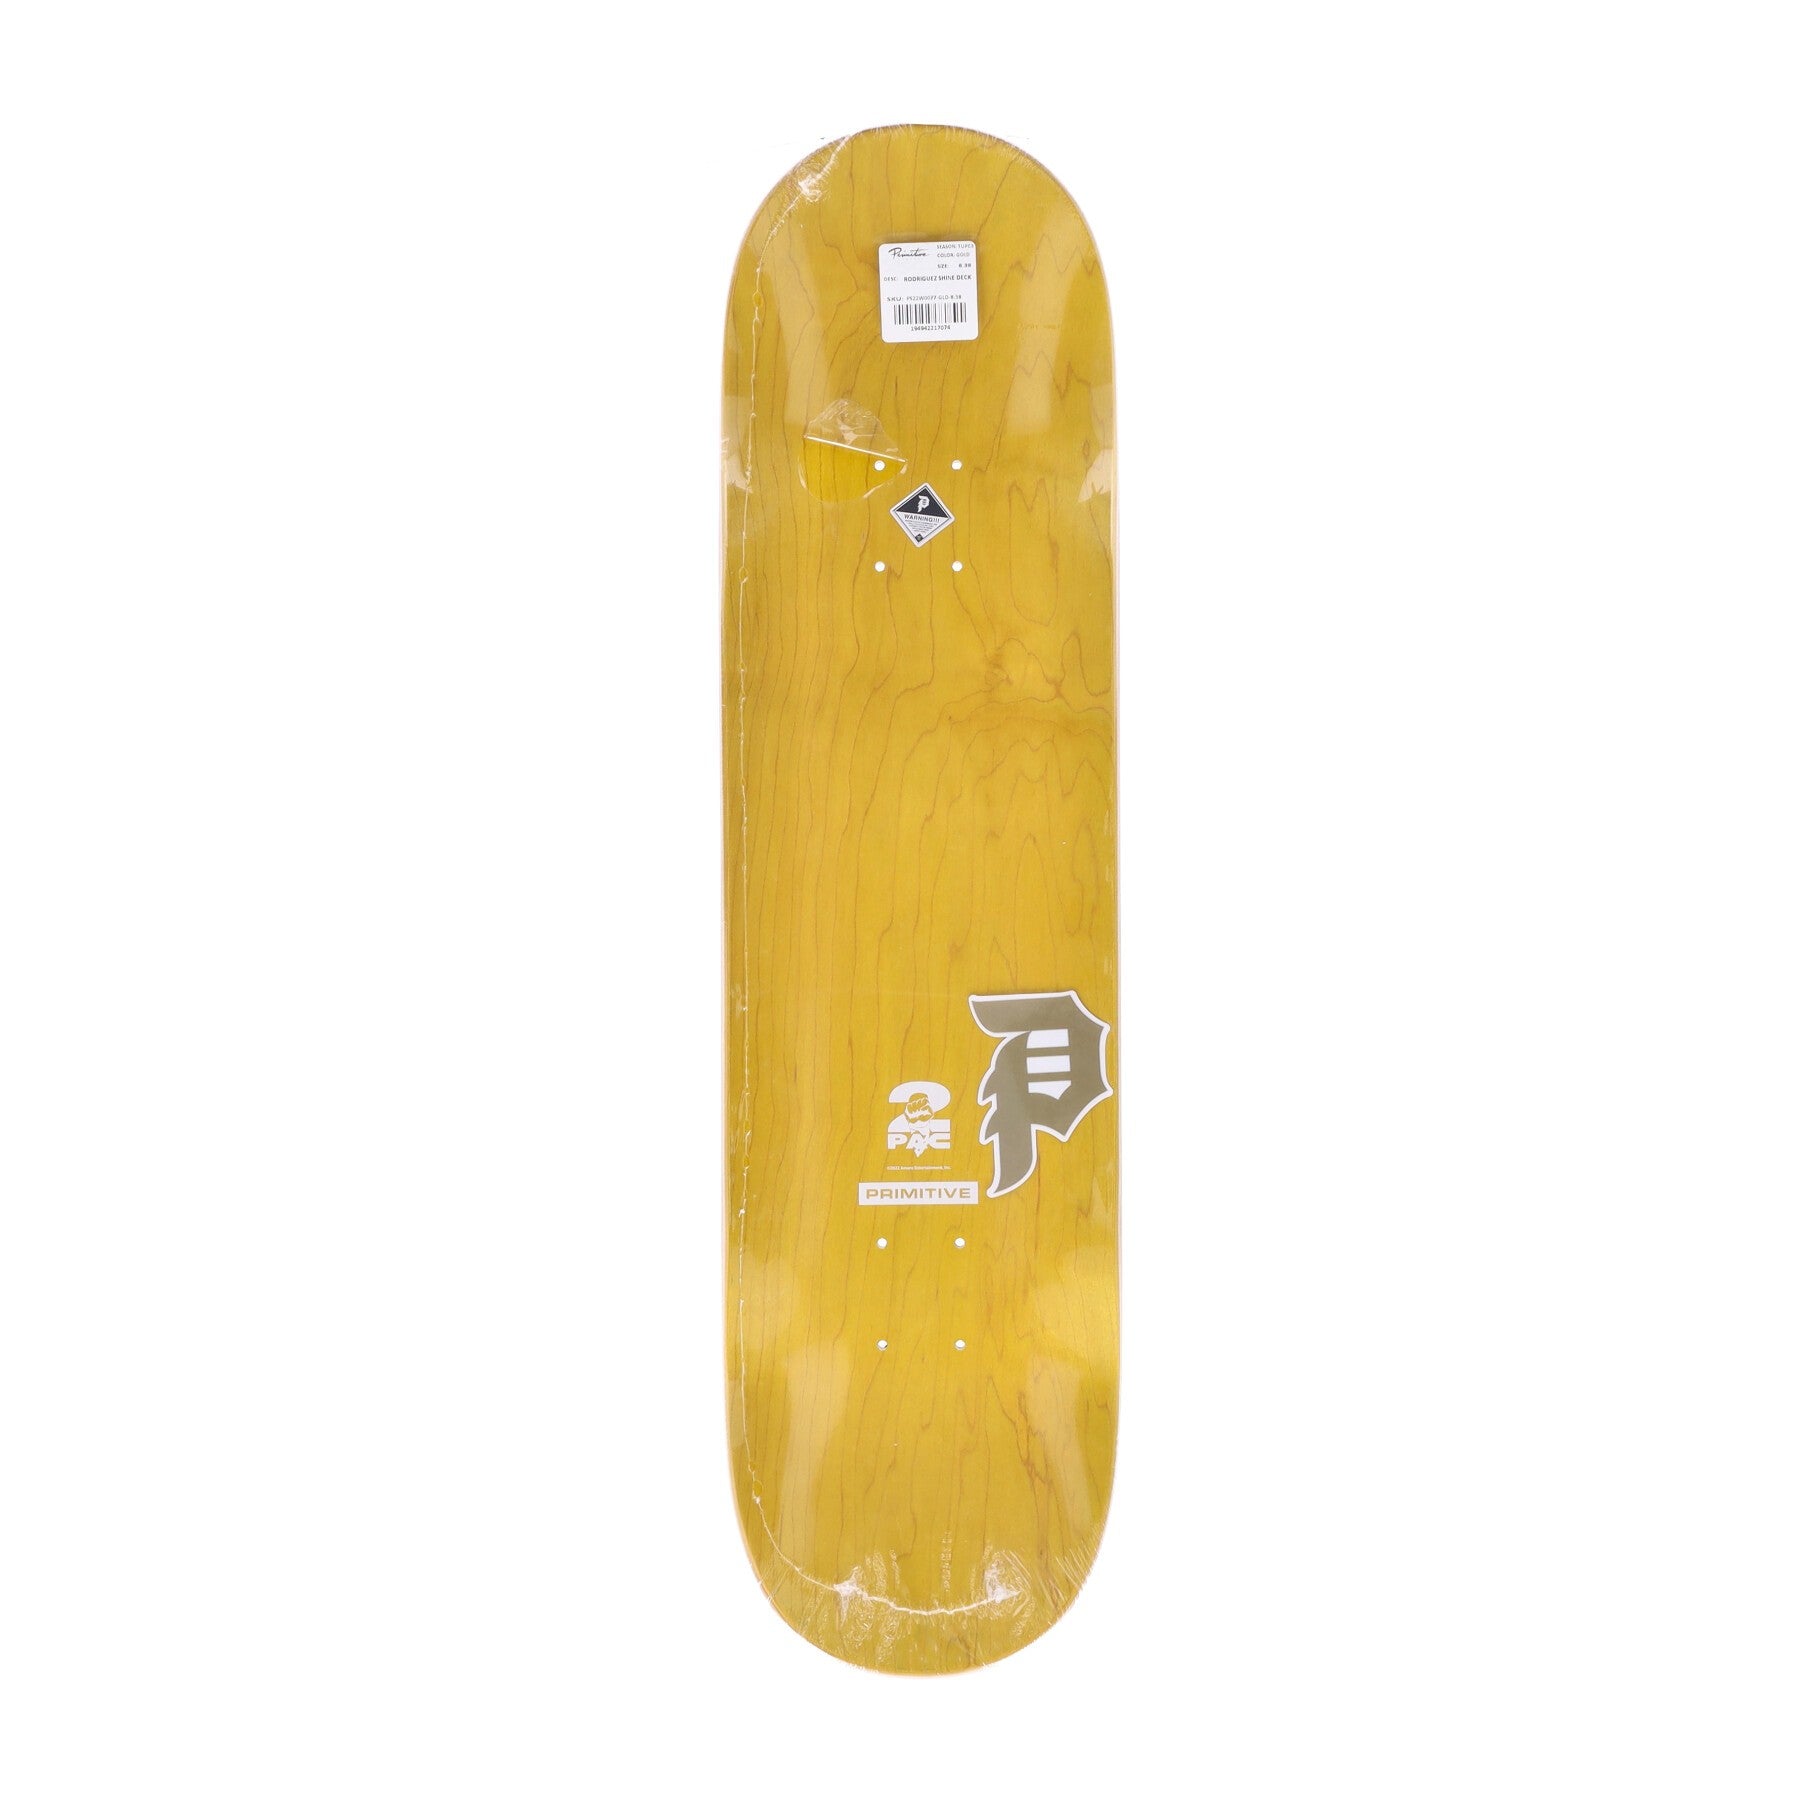 Primitive, Skateboard Tavola Uomo Rodriguez Shine Deck X 2pac, Yellow